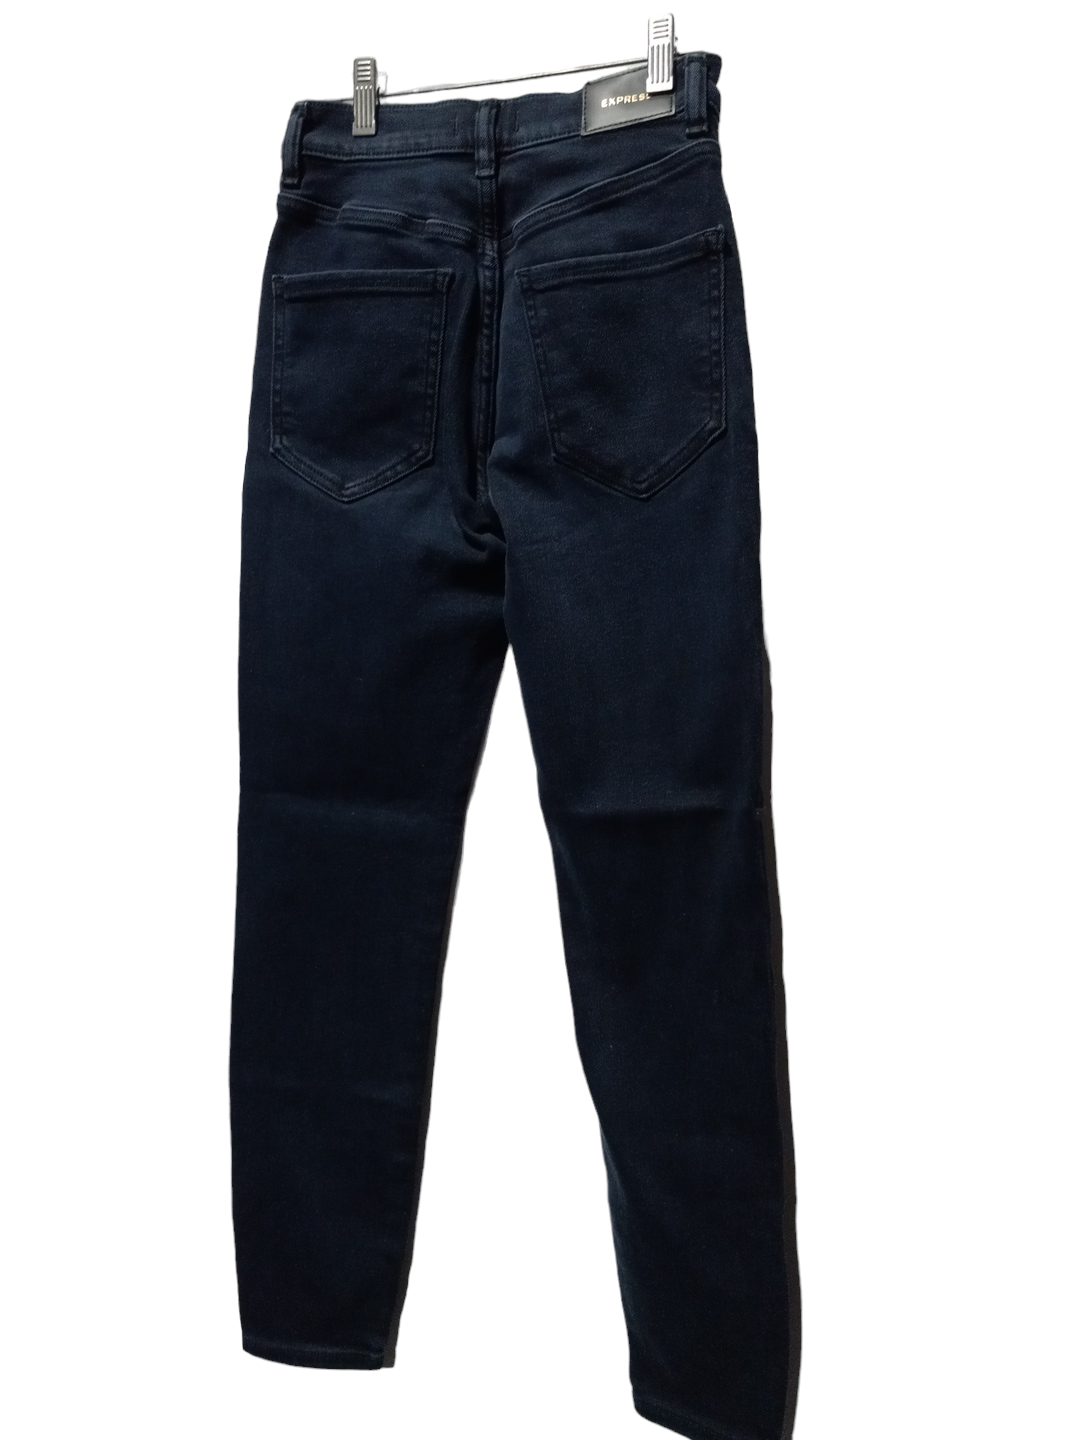 Blue Denim Jeans Skinny Express, Size 0